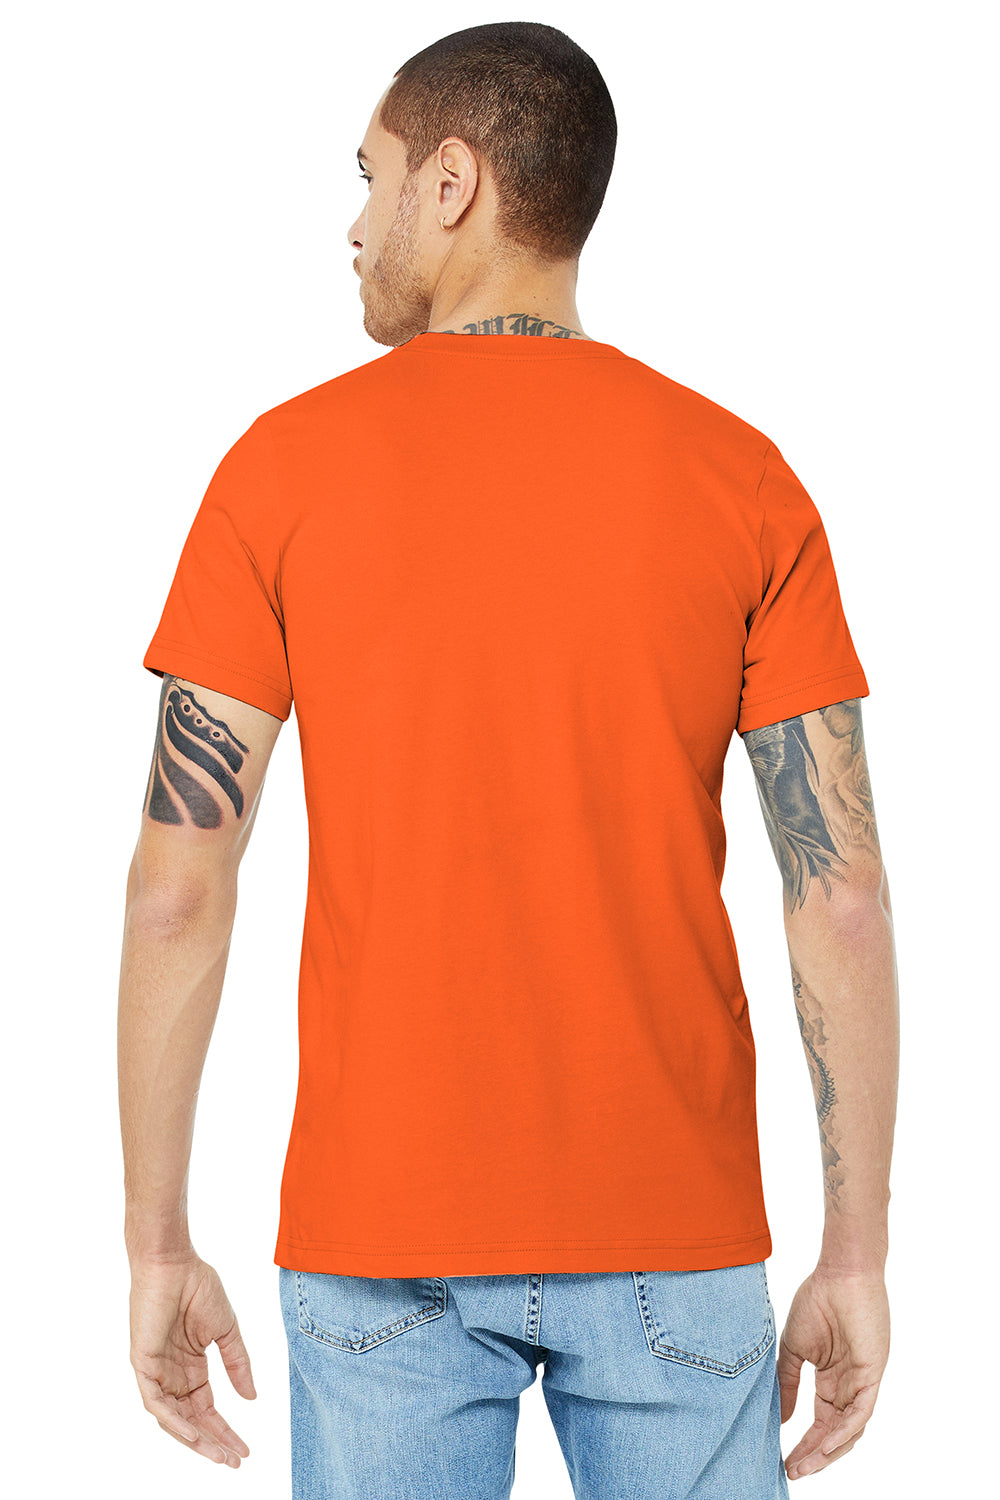 Bella + Canvas BC3001/3001C Mens Jersey Short Sleeve Crewneck T-Shirt Orange Model Back